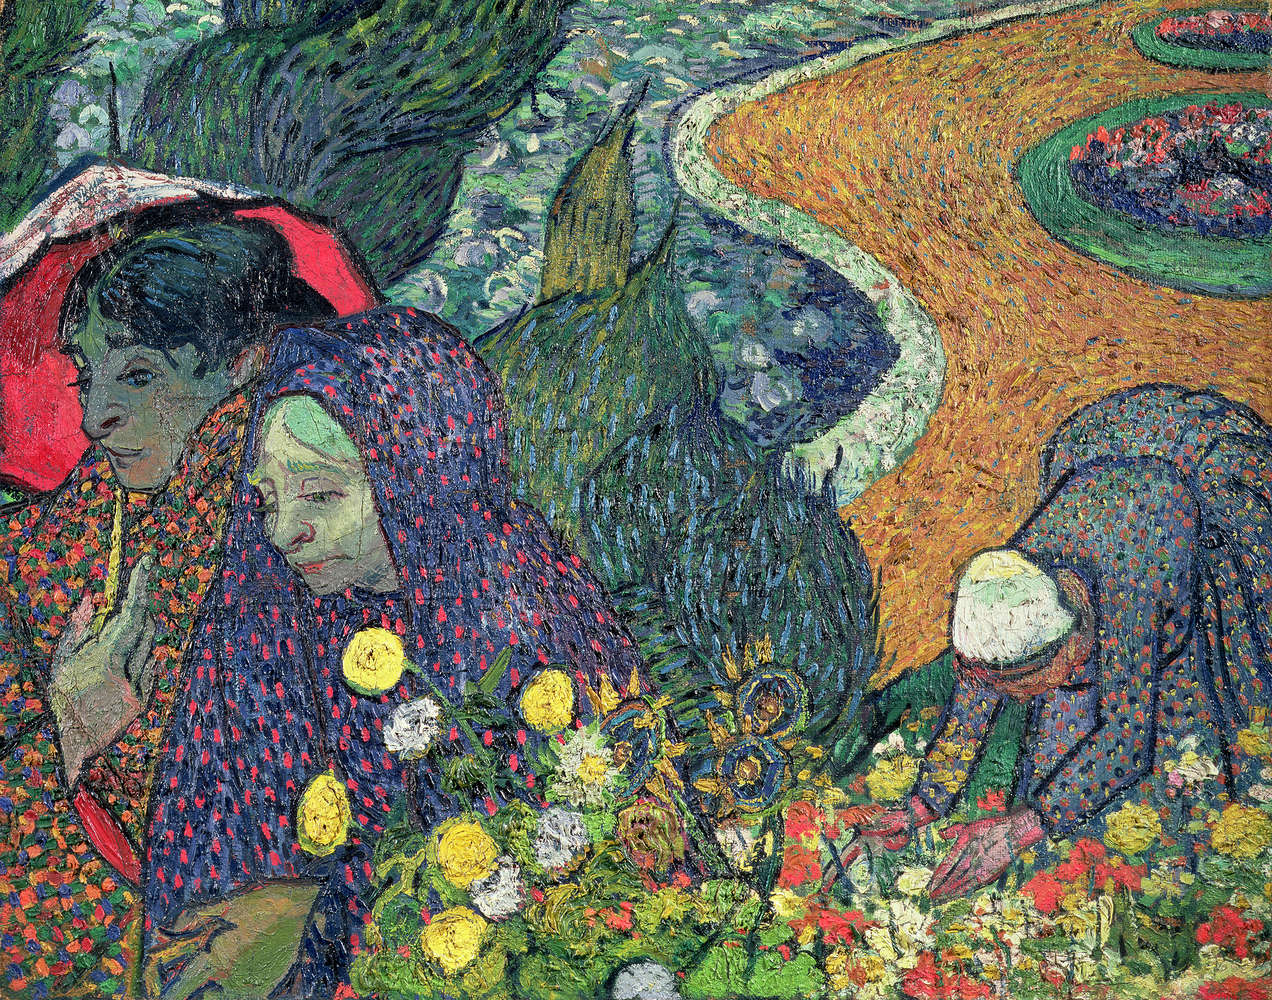             Mural "Paseo por Arles" de Vincent van Gogh
        